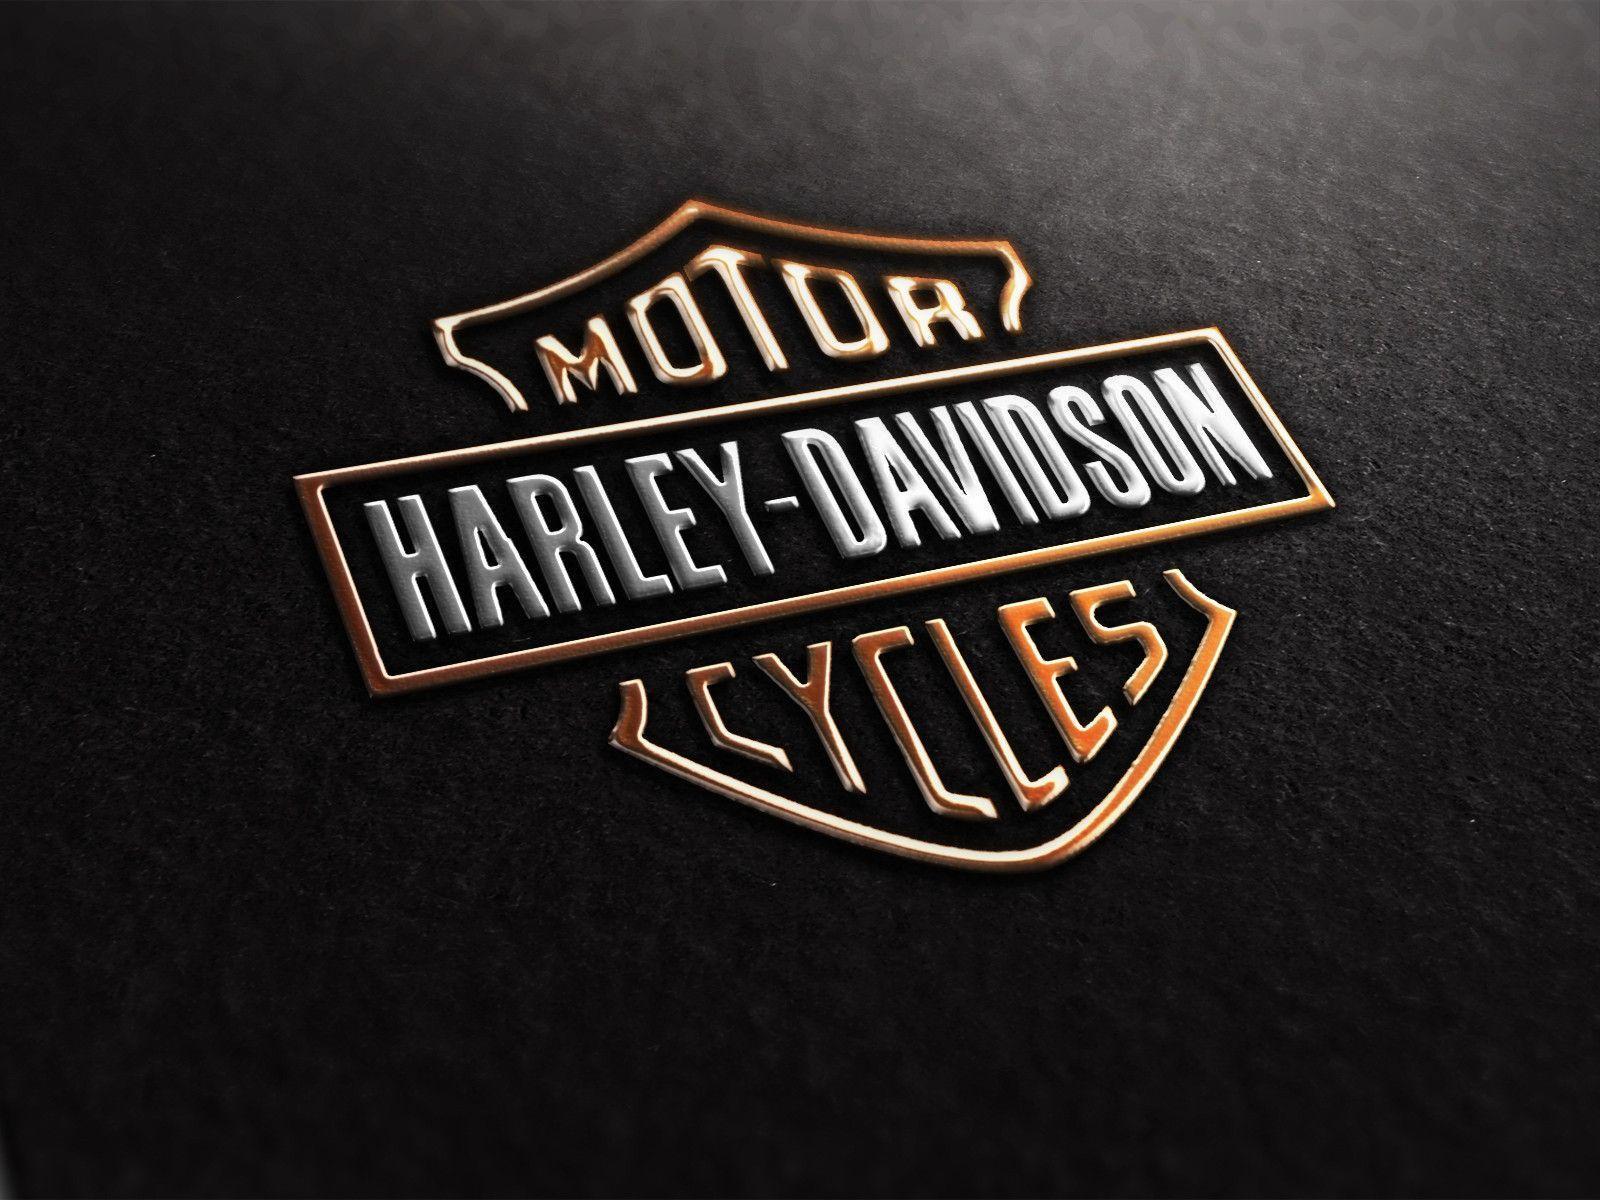 Harley Davidson Wallpaper on .hipwallpaper.com